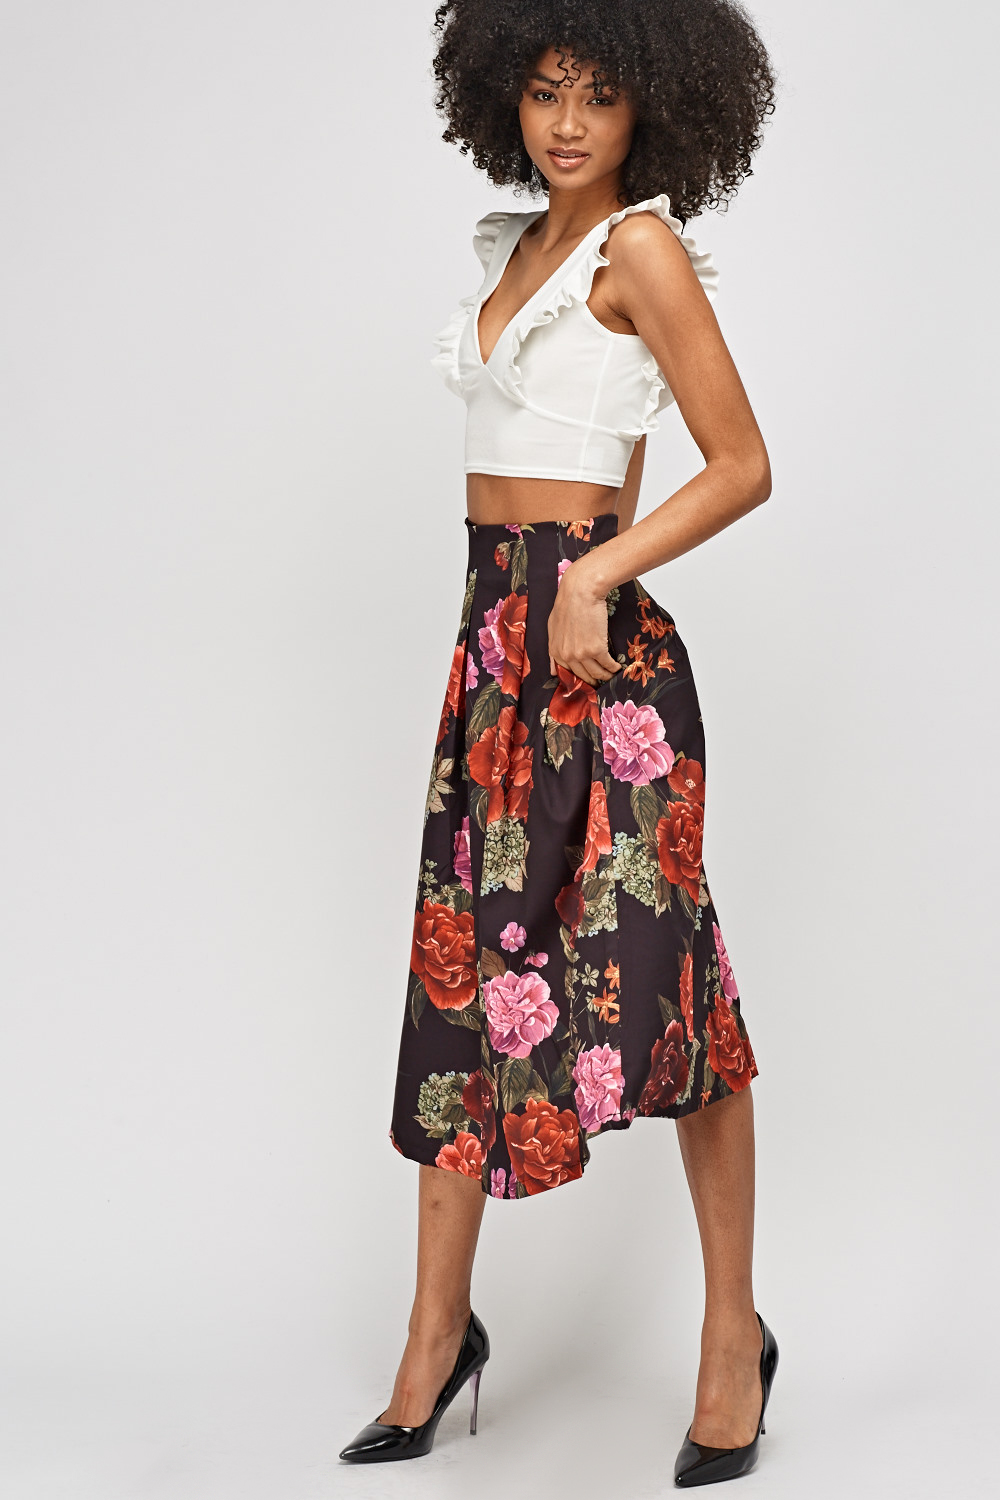 Floral Midi Skirt - Just $6